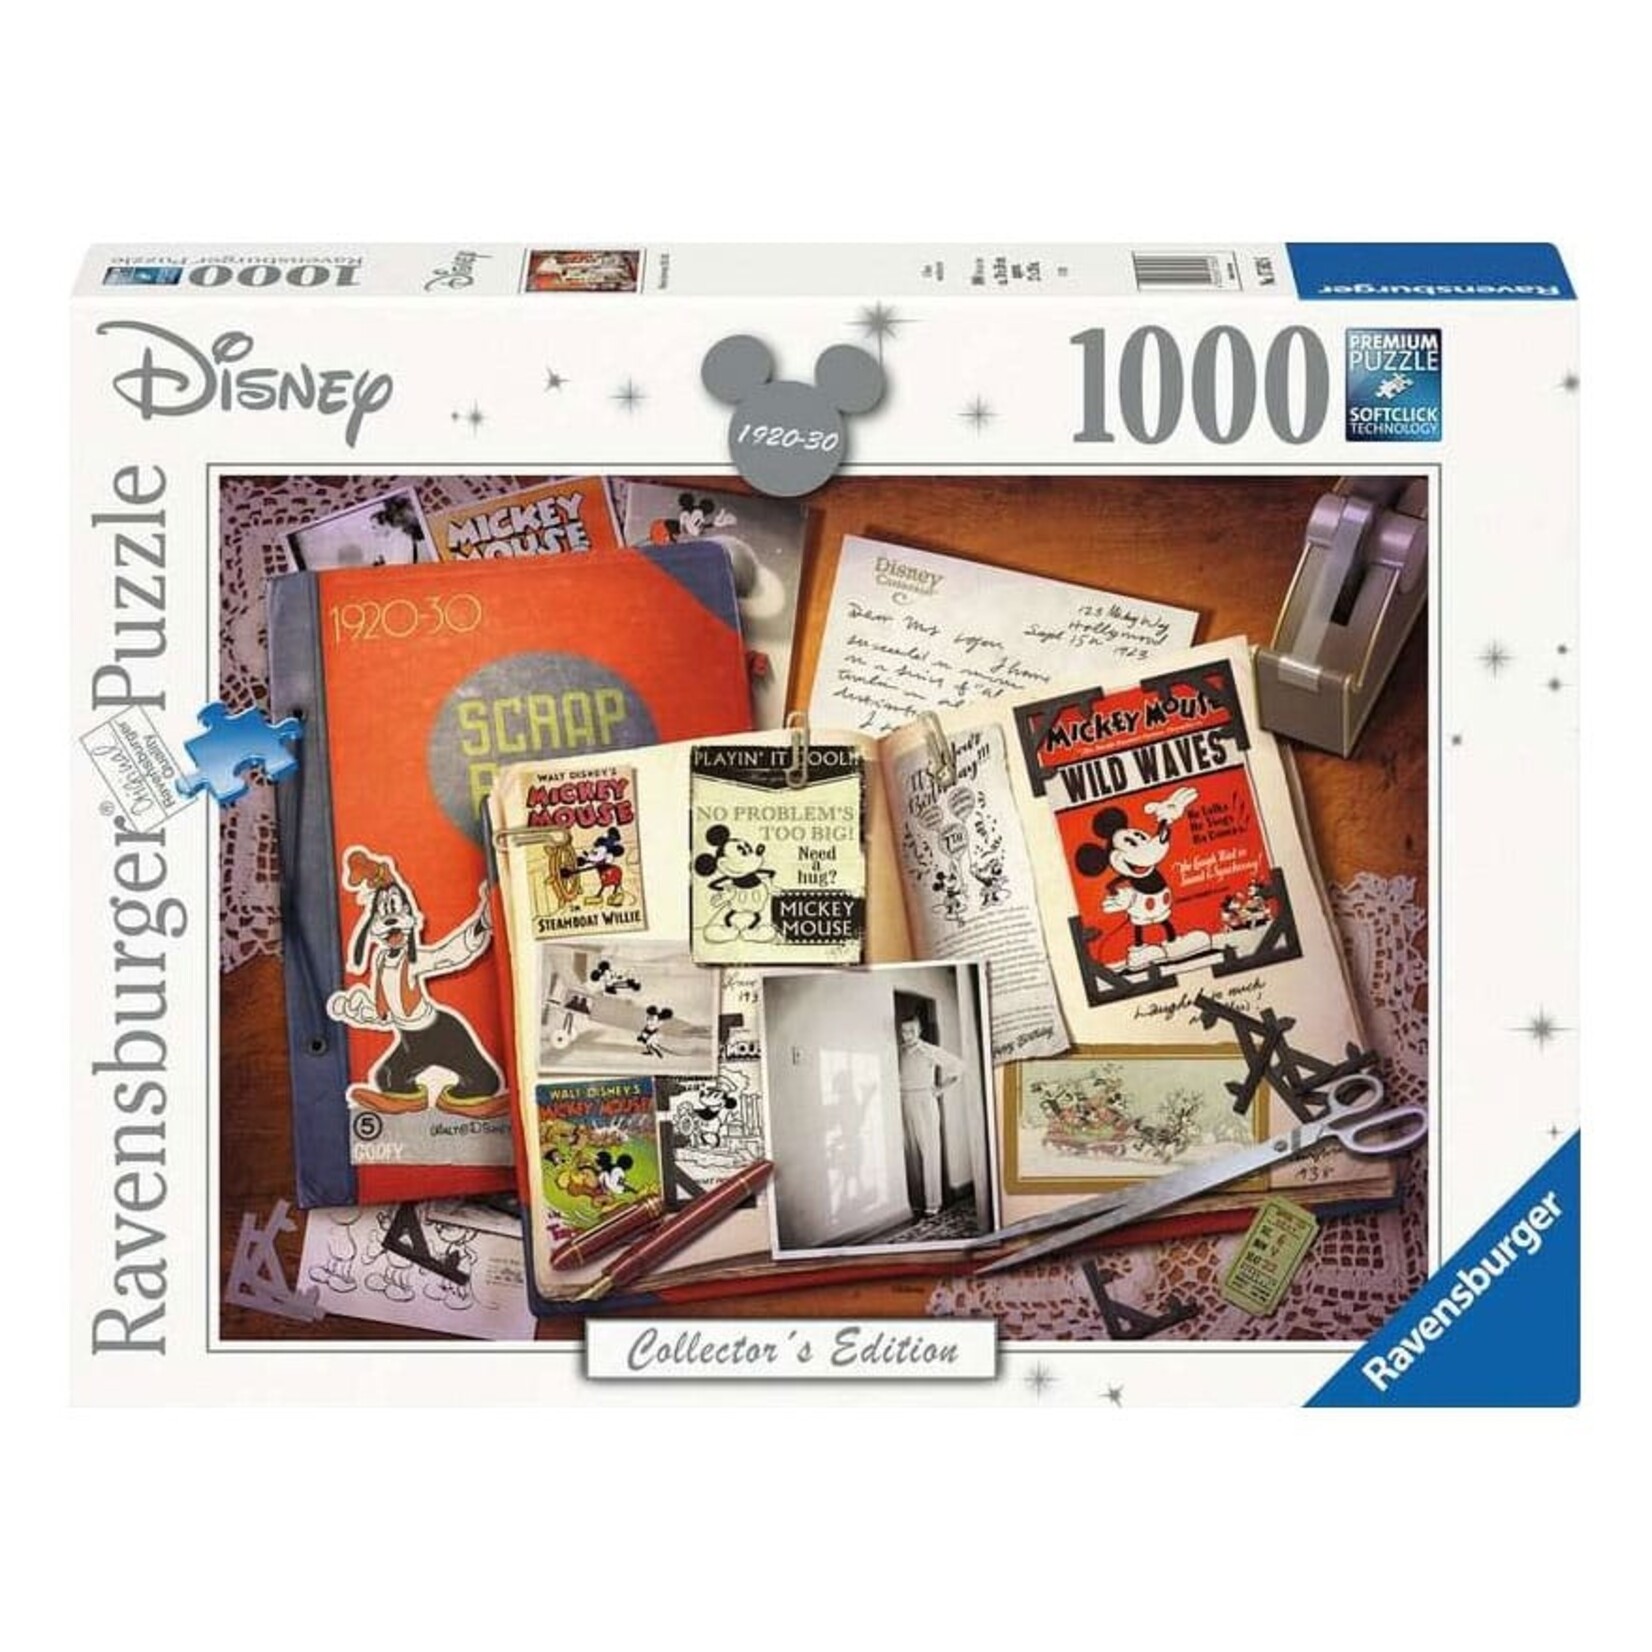 Ravensburger Ravensburger Disney Collector's Edition Puzzle 1920-1930 1000 pcs